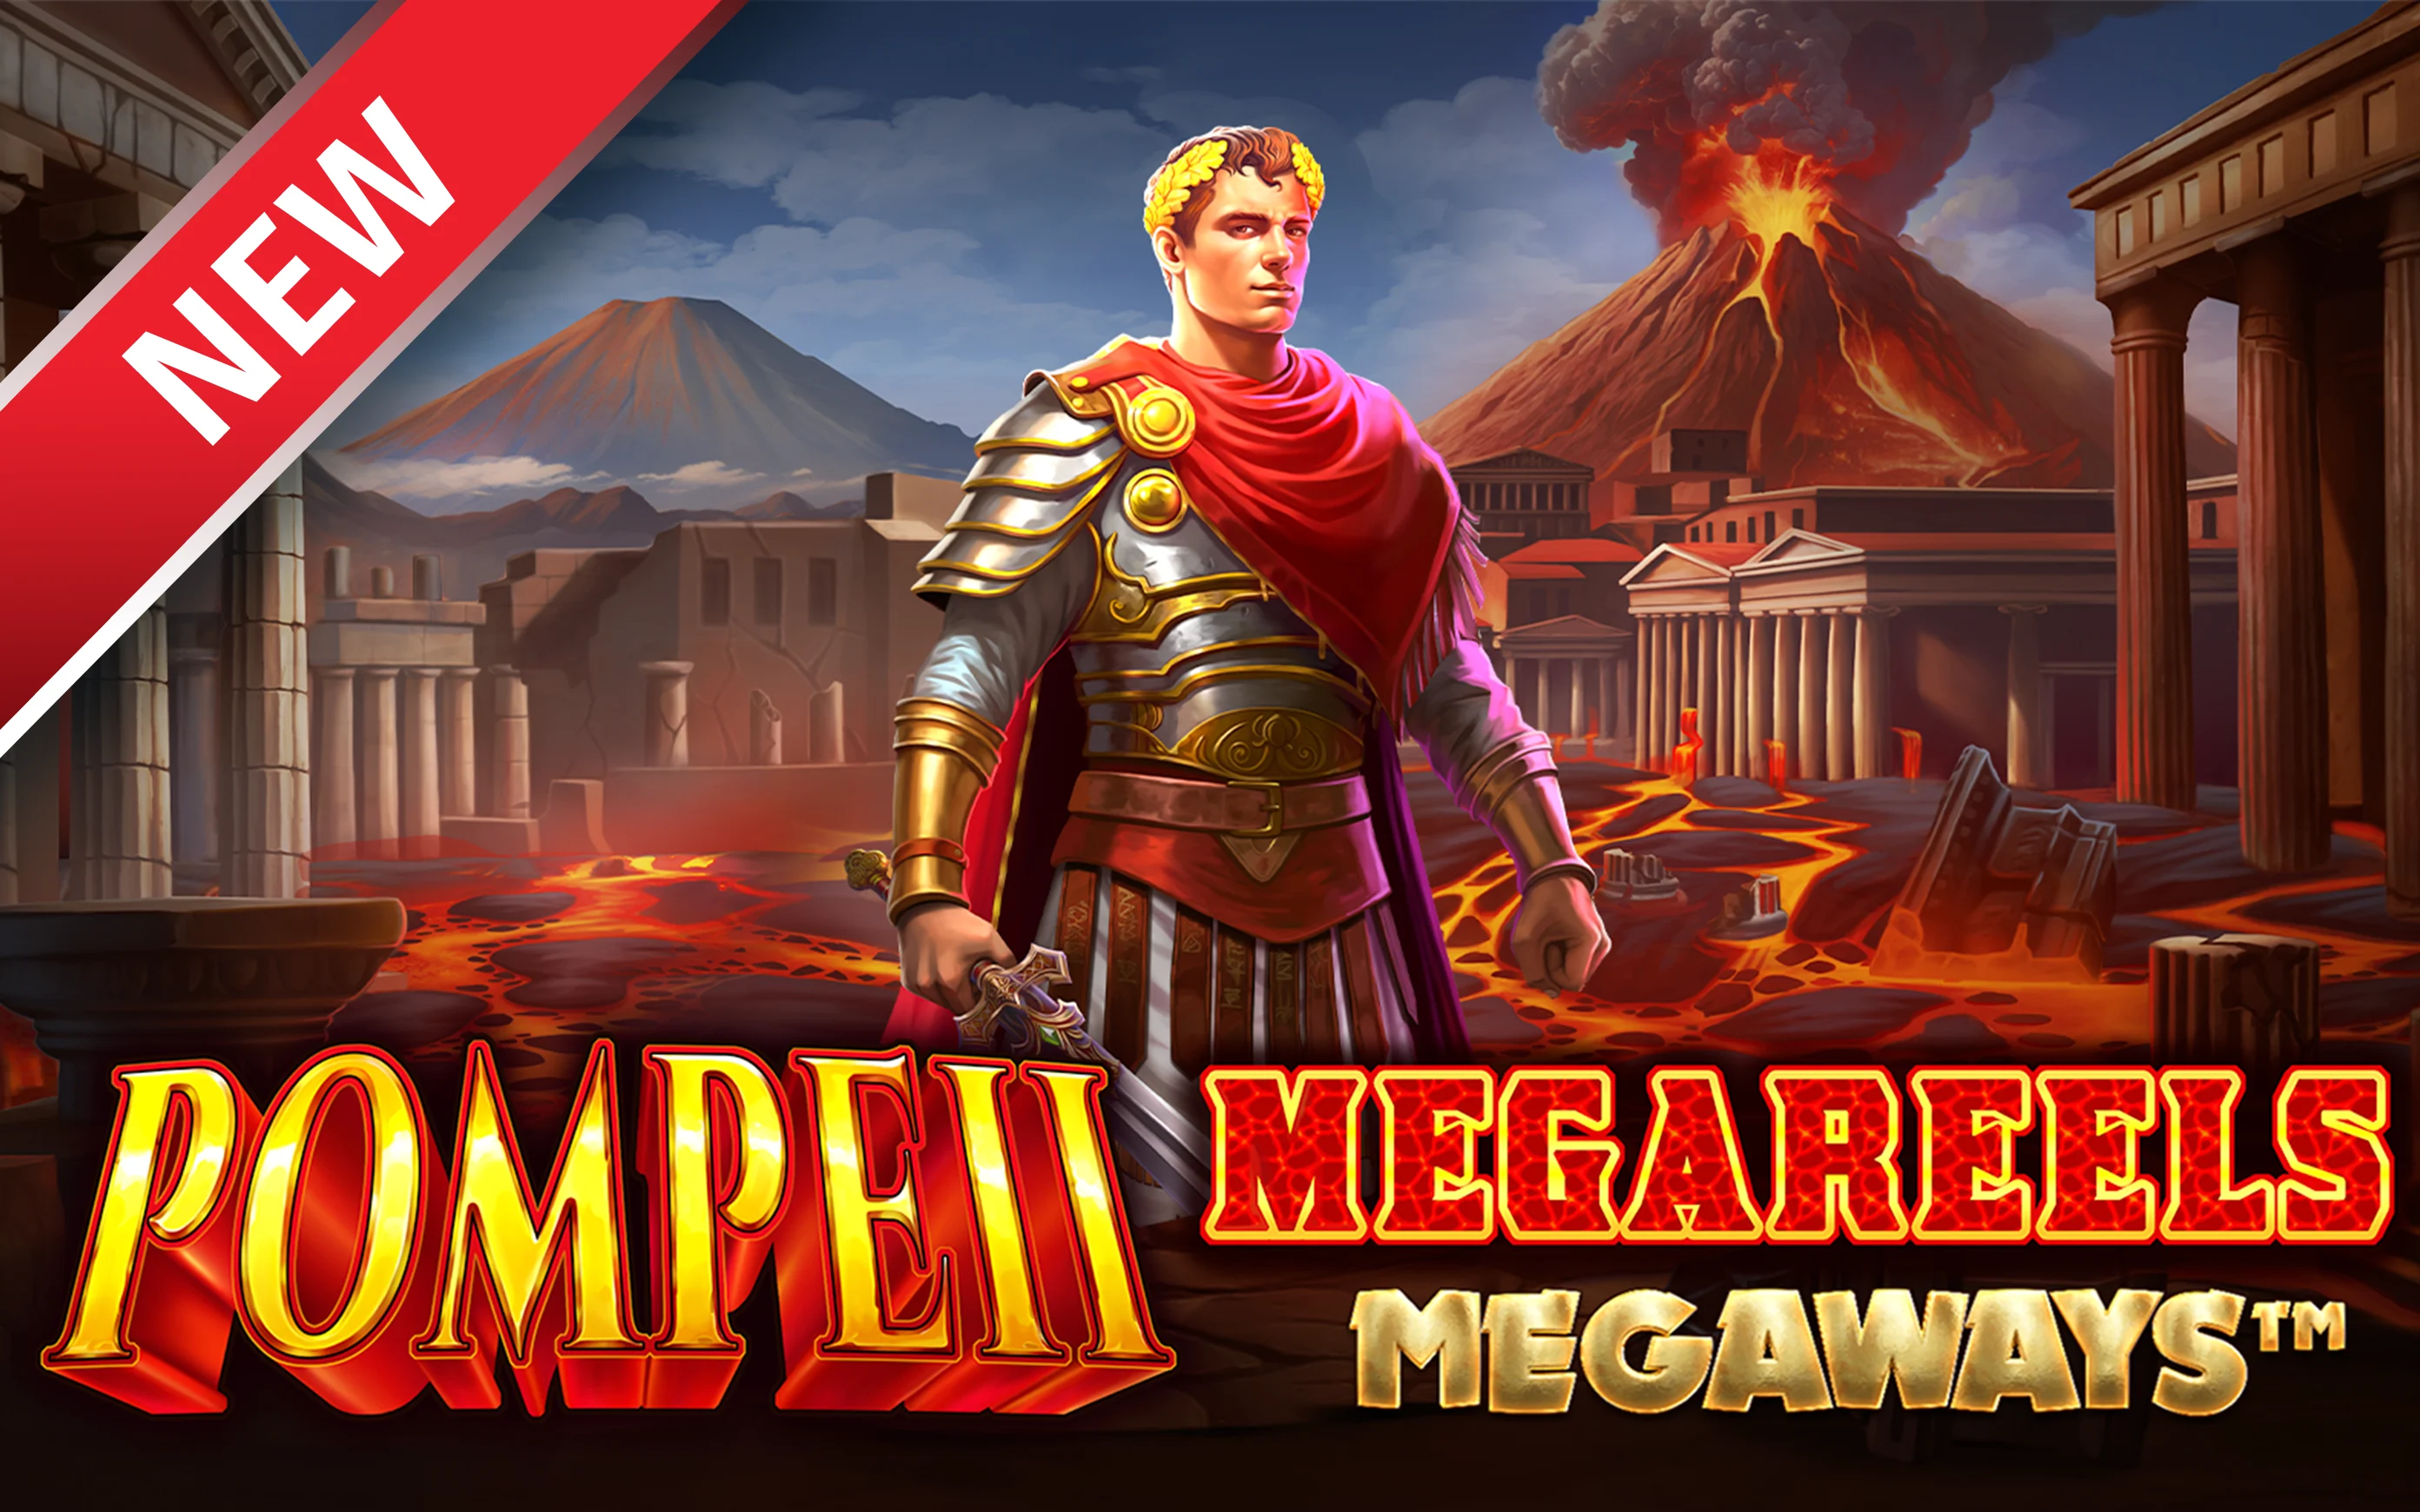 Play Pompeii Megareels Megaways™ on Starcasino.be online casino